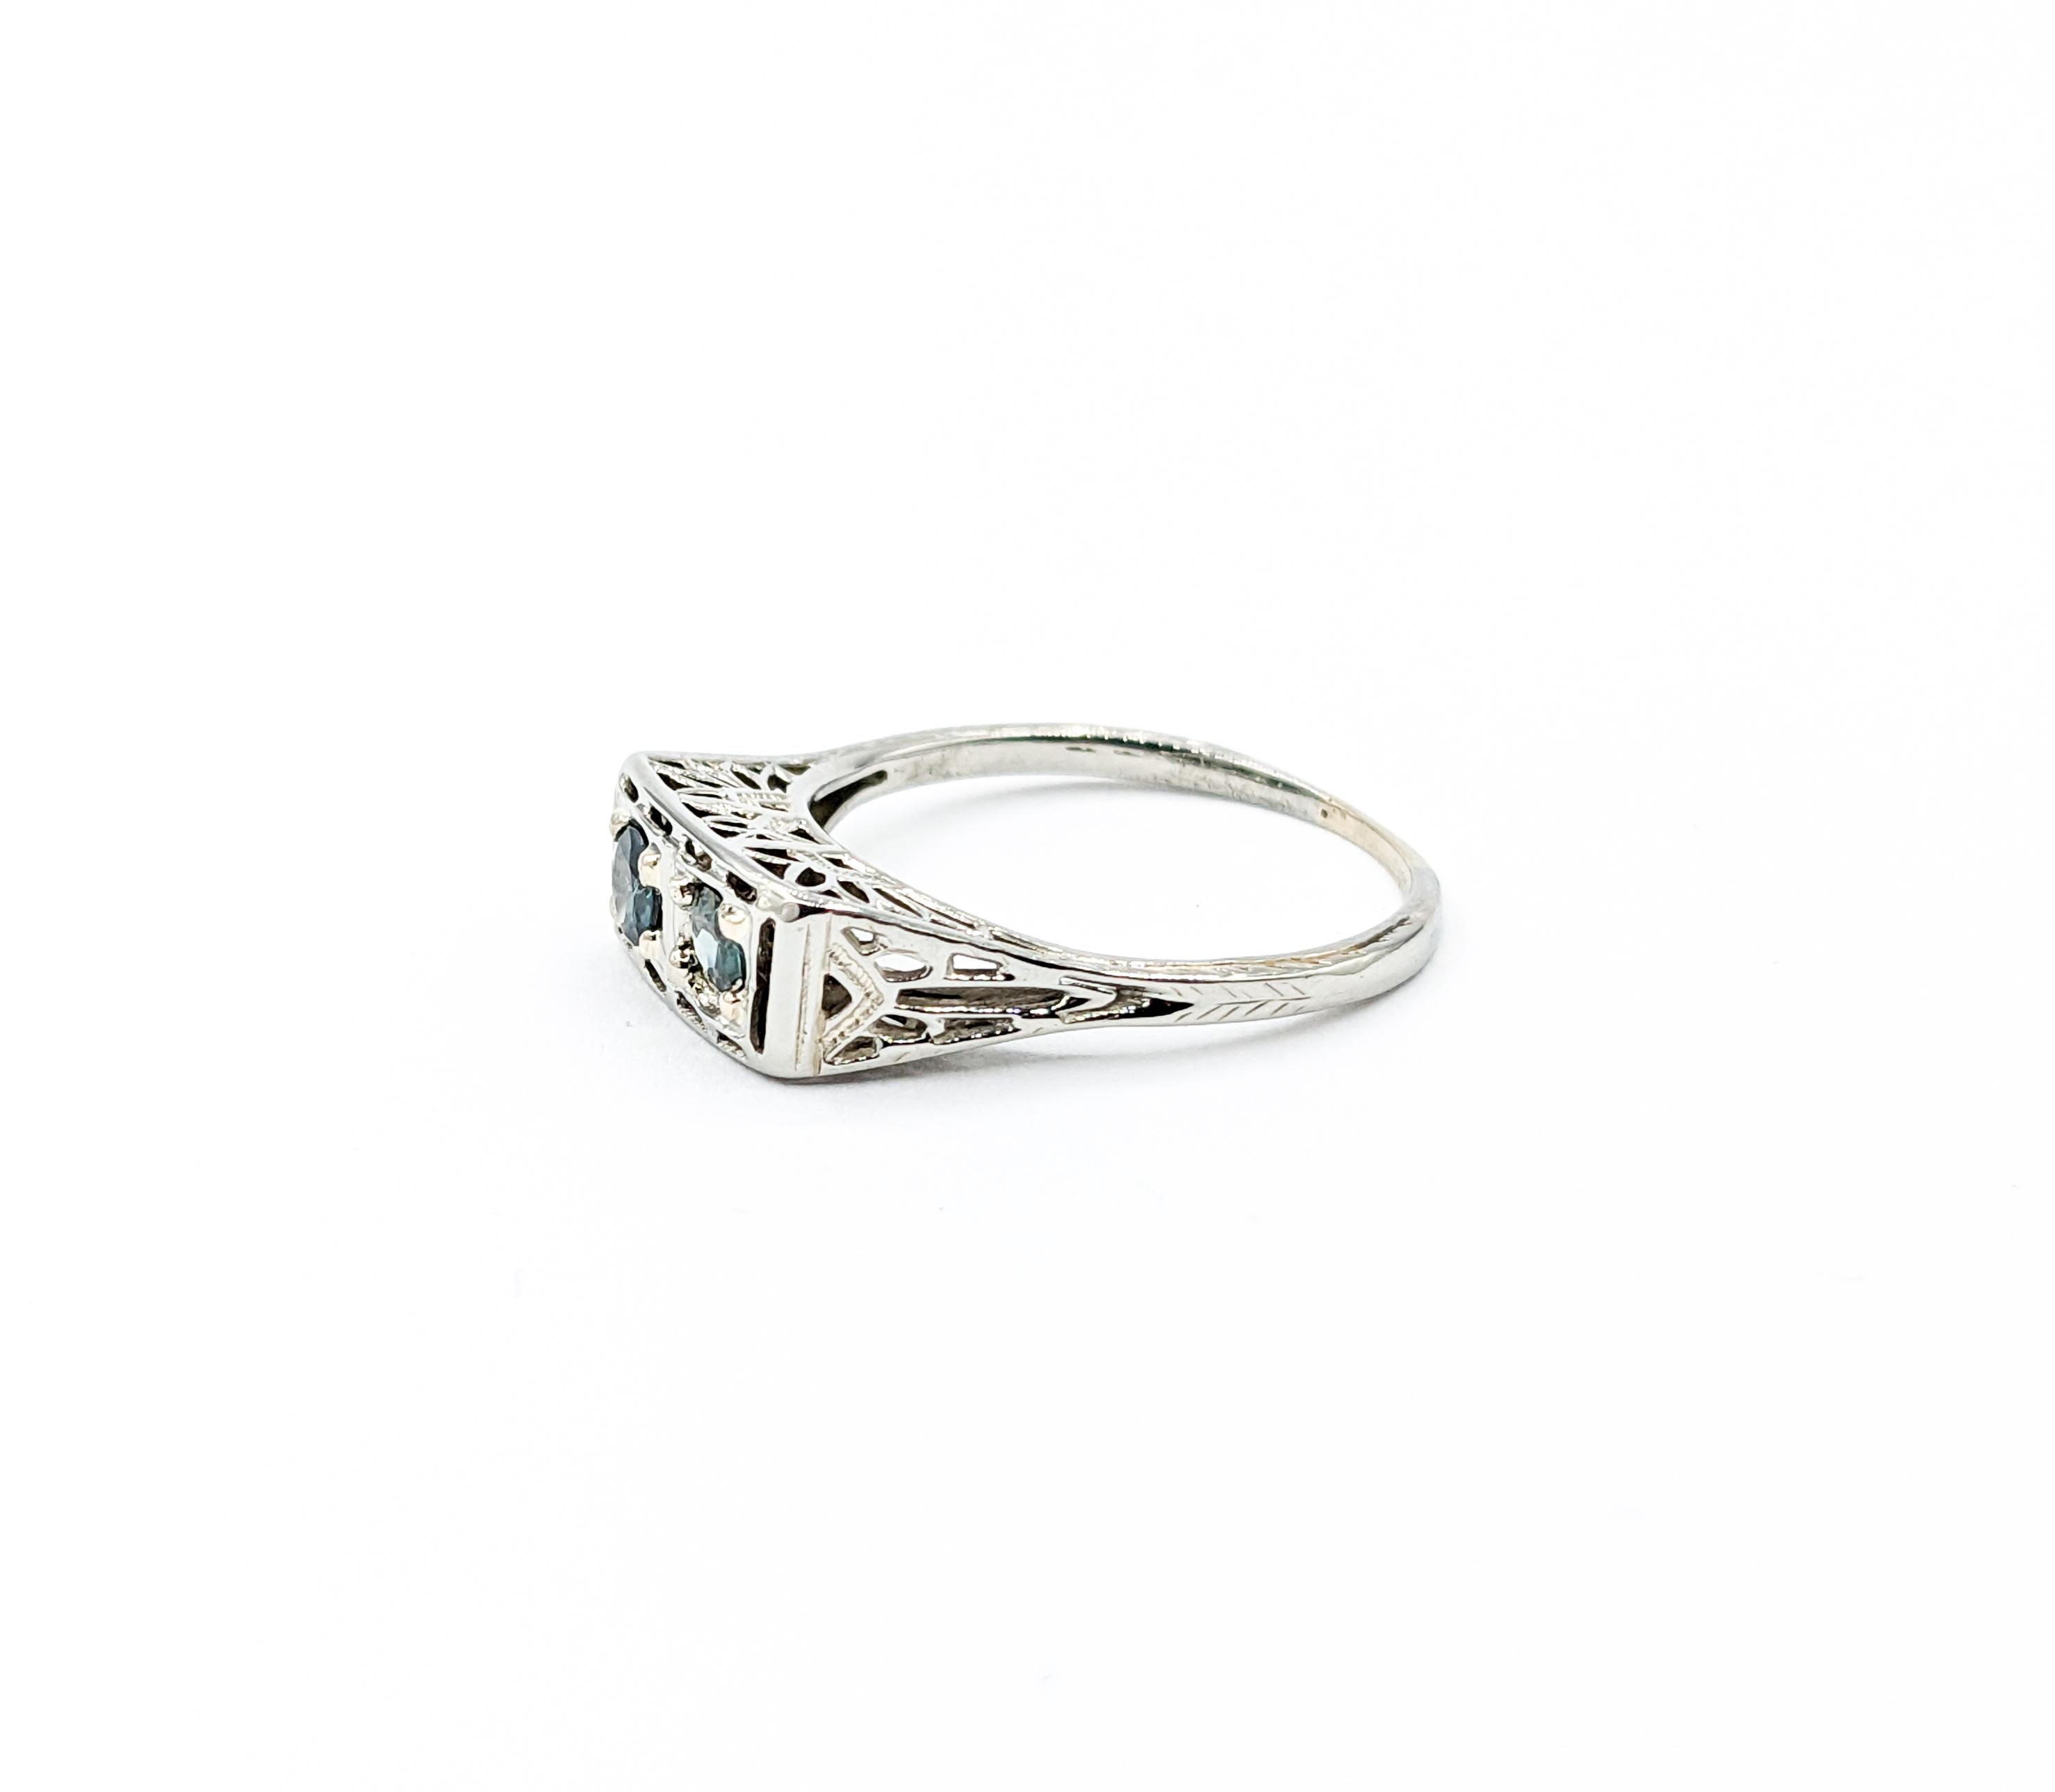 Wonderful Art Deco Color Change Alexandrite Ring in 18Kt White Gold 2